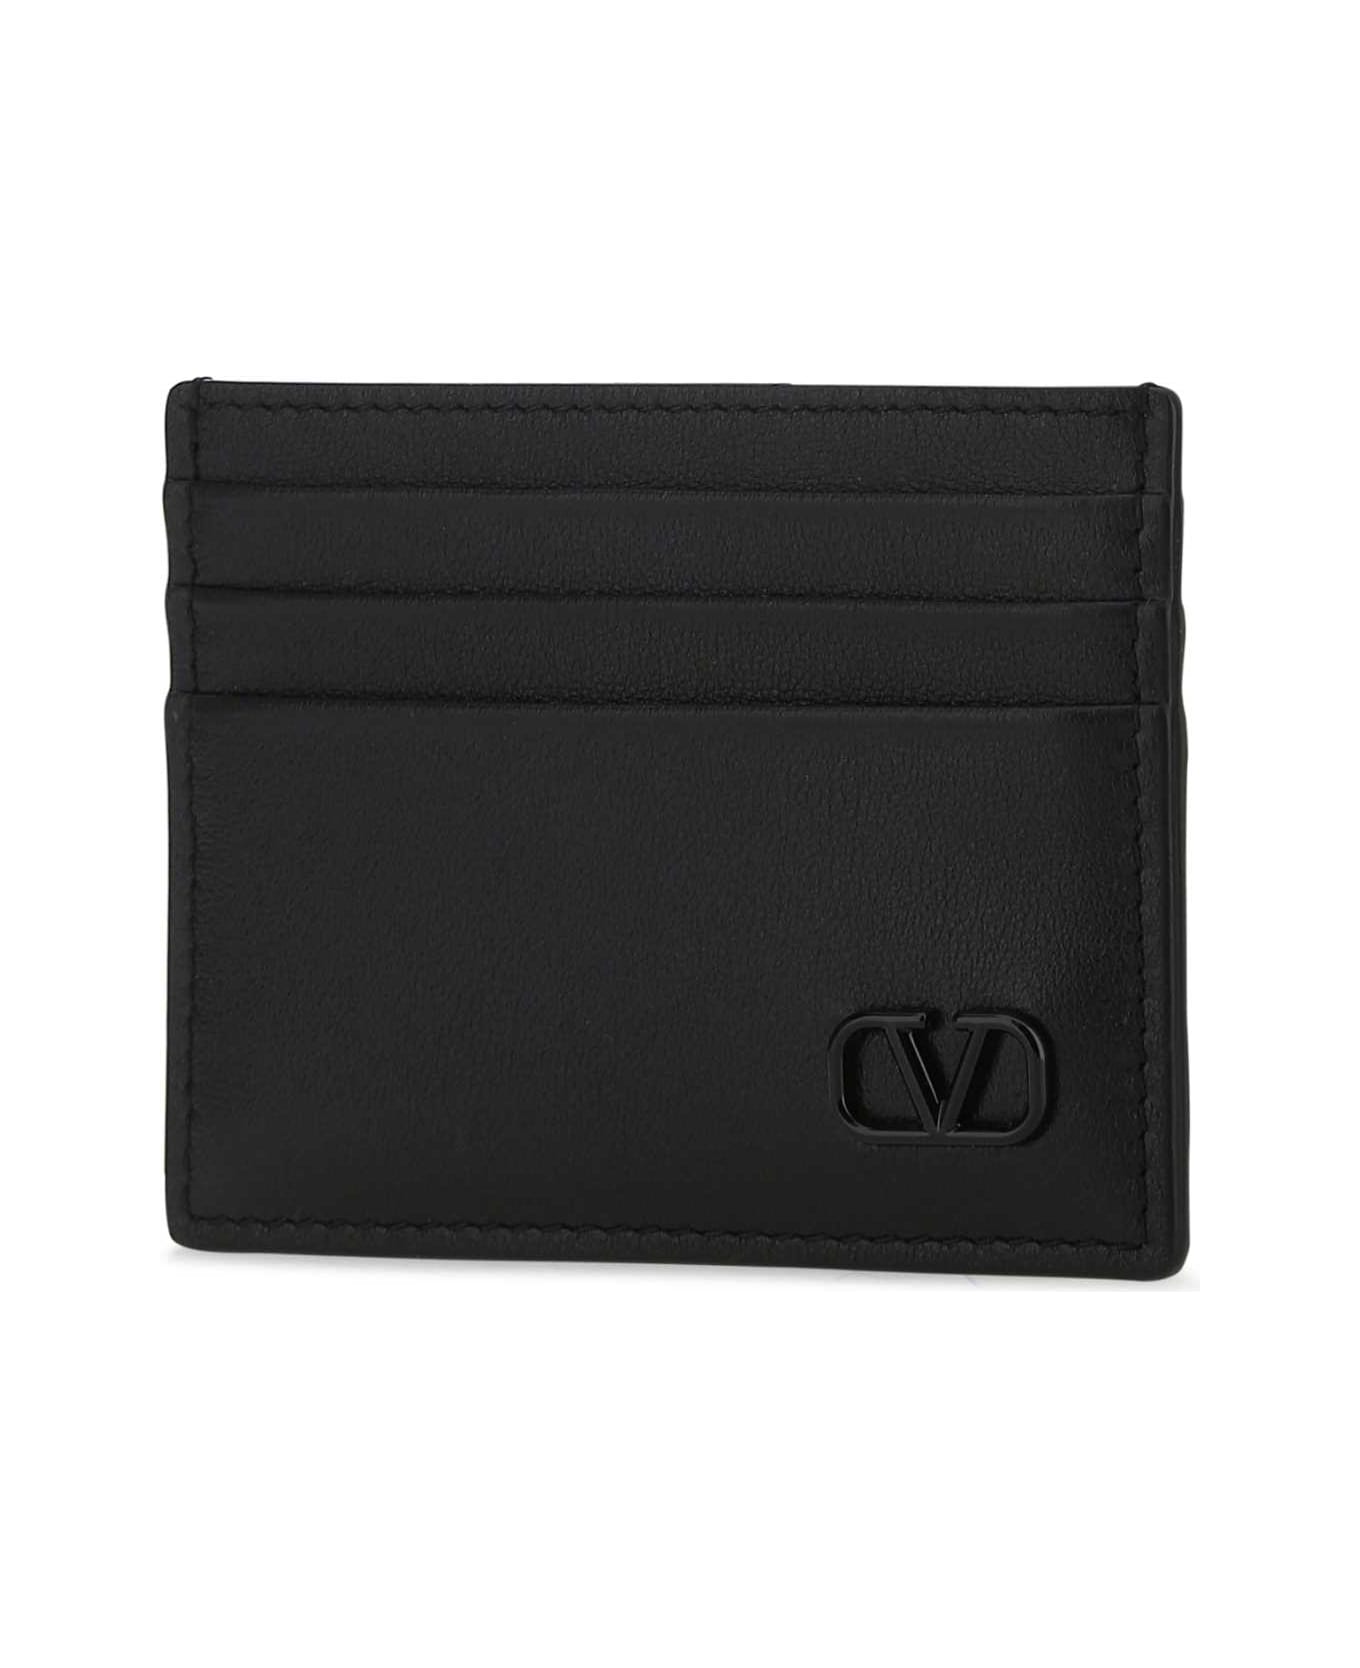 Valentino Garavani Black Leather Card Holder - NERO 財布